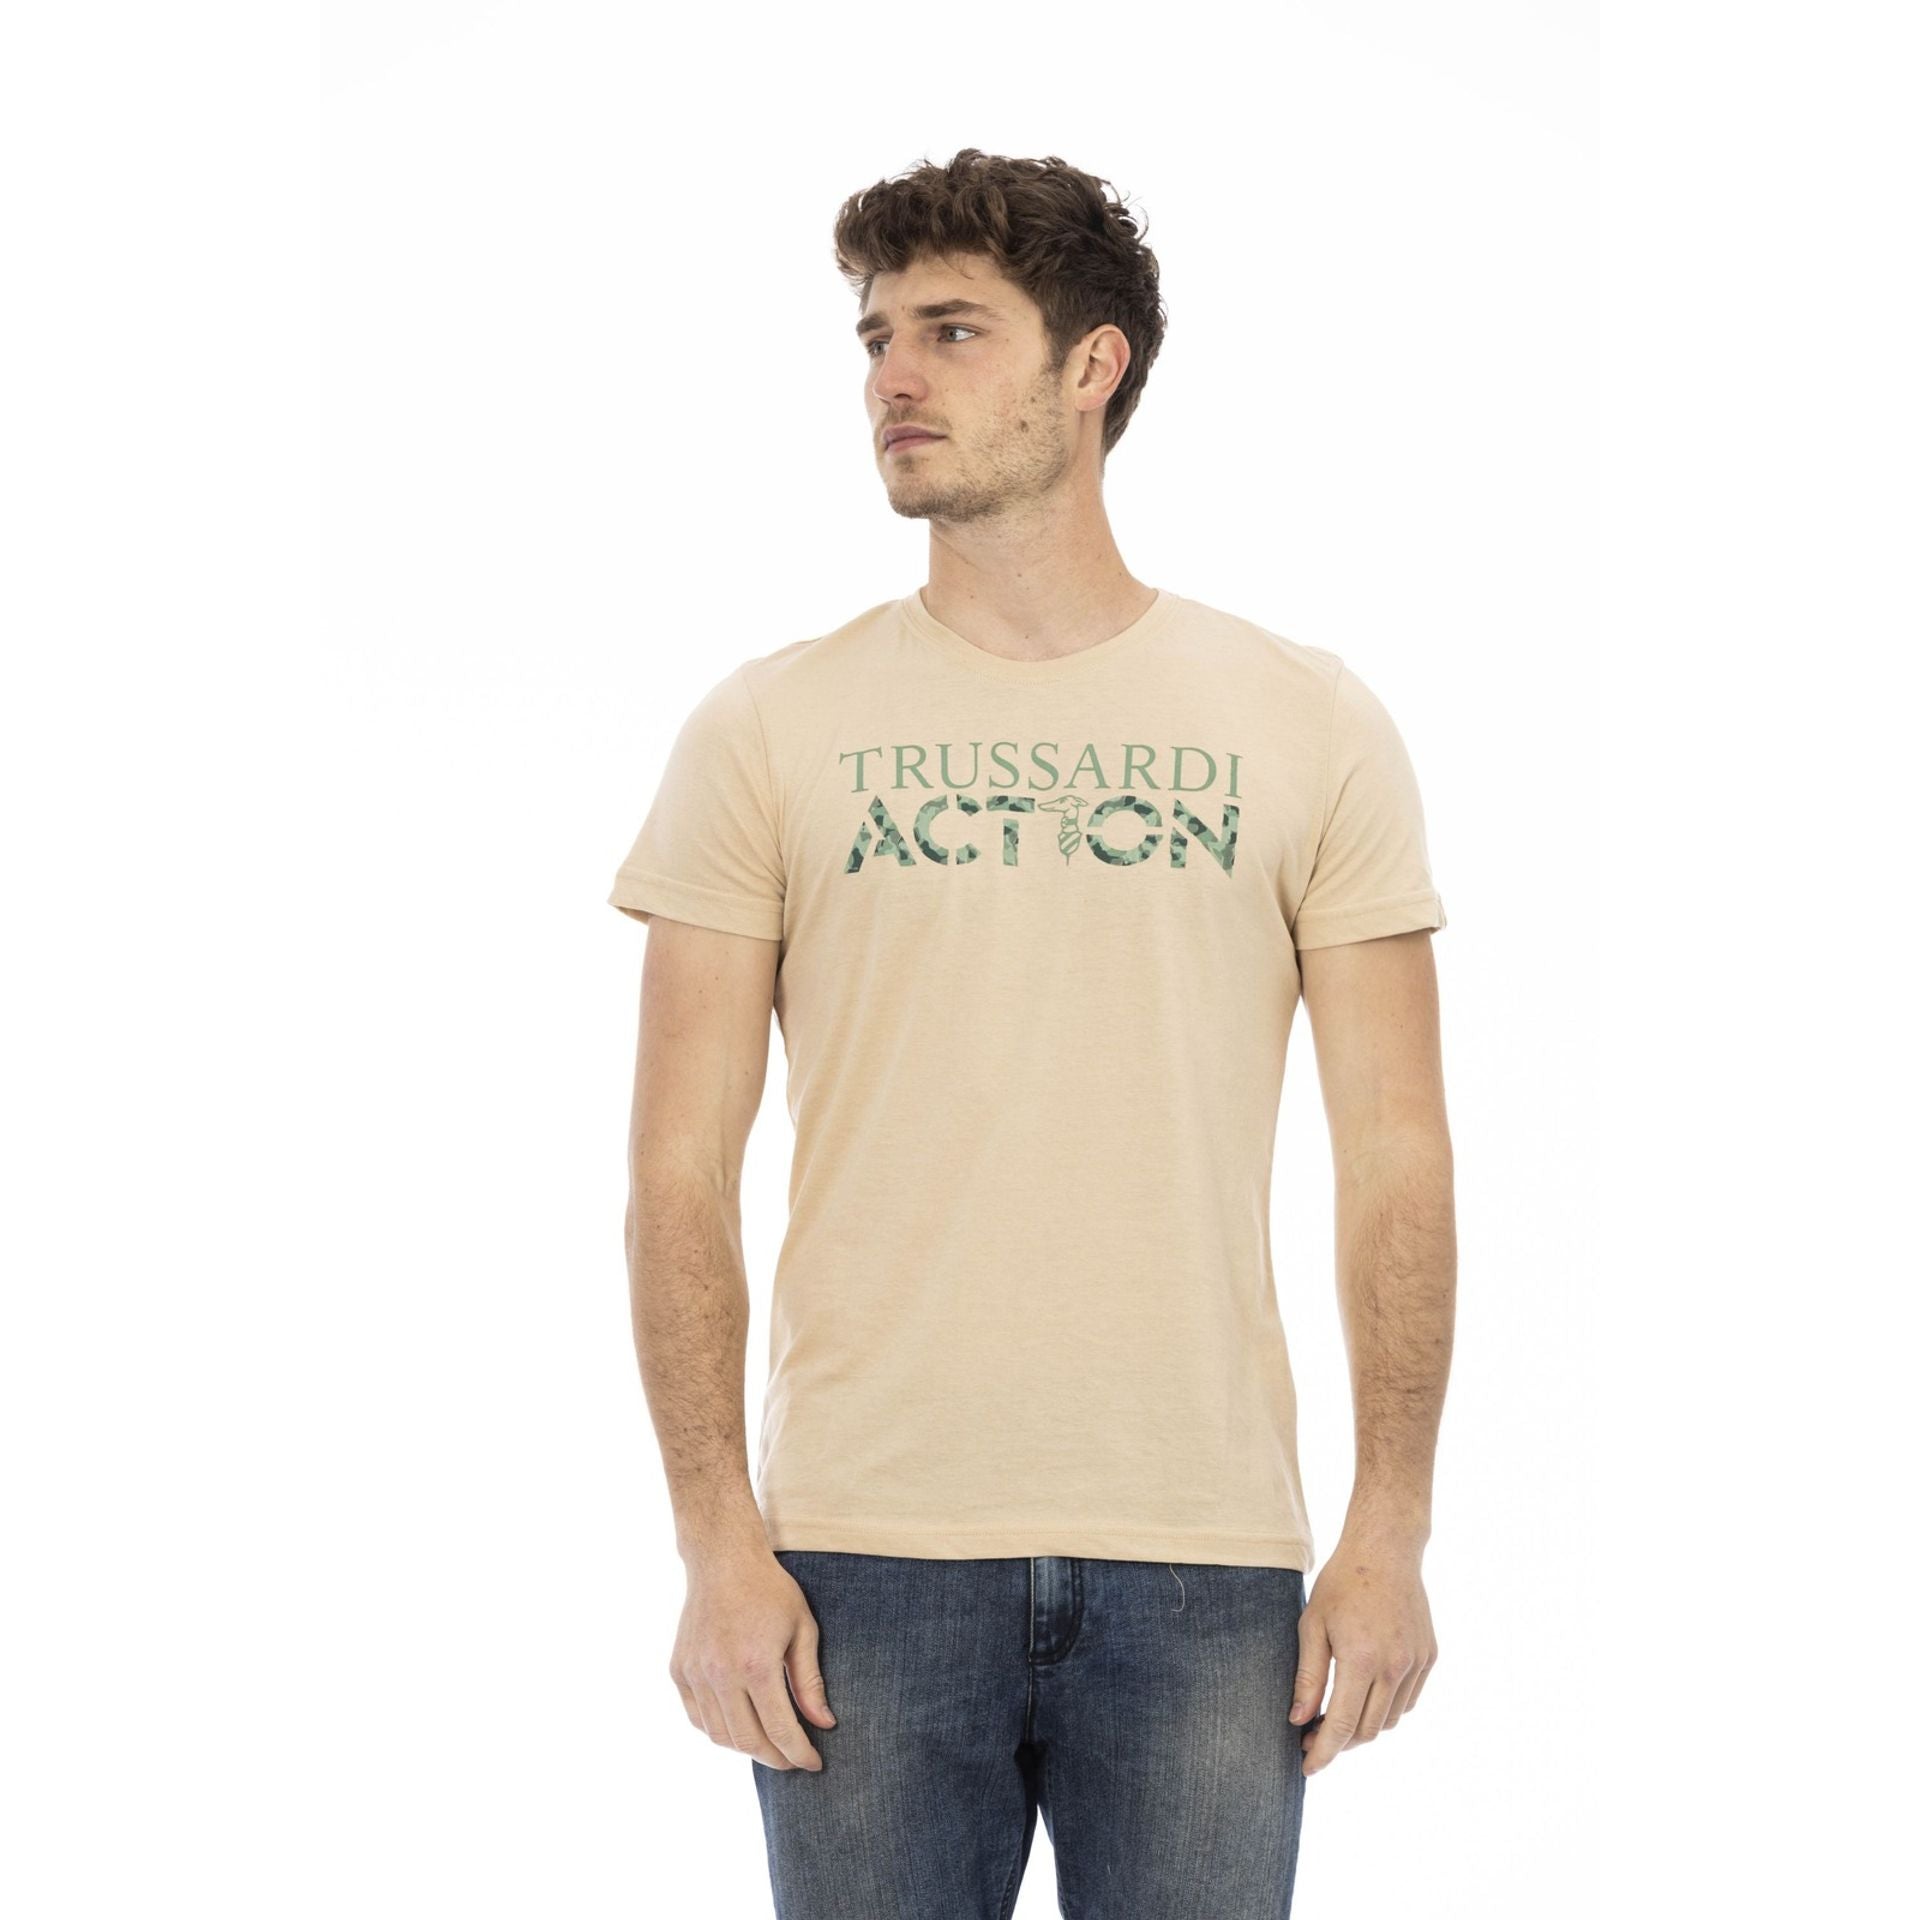 Trussardi Action T-shirts